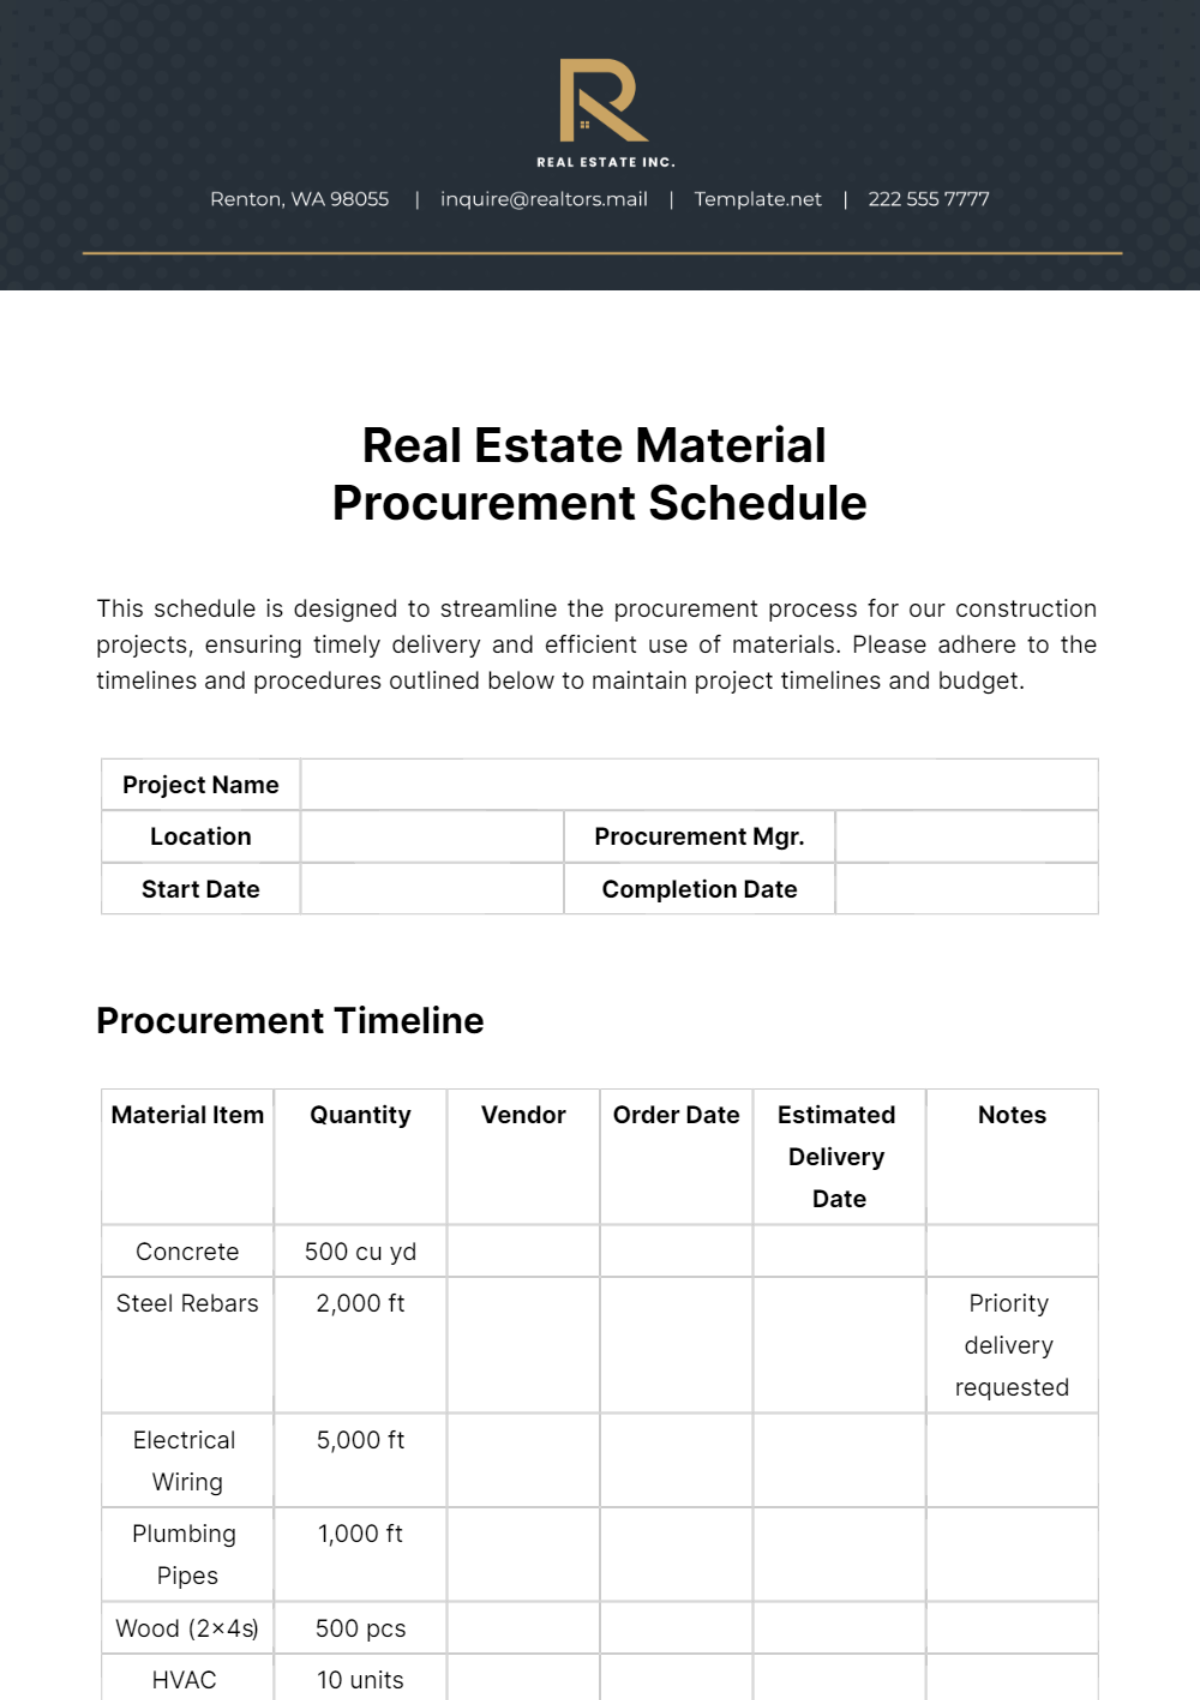 Real Estate Material Procurement Schedule Template